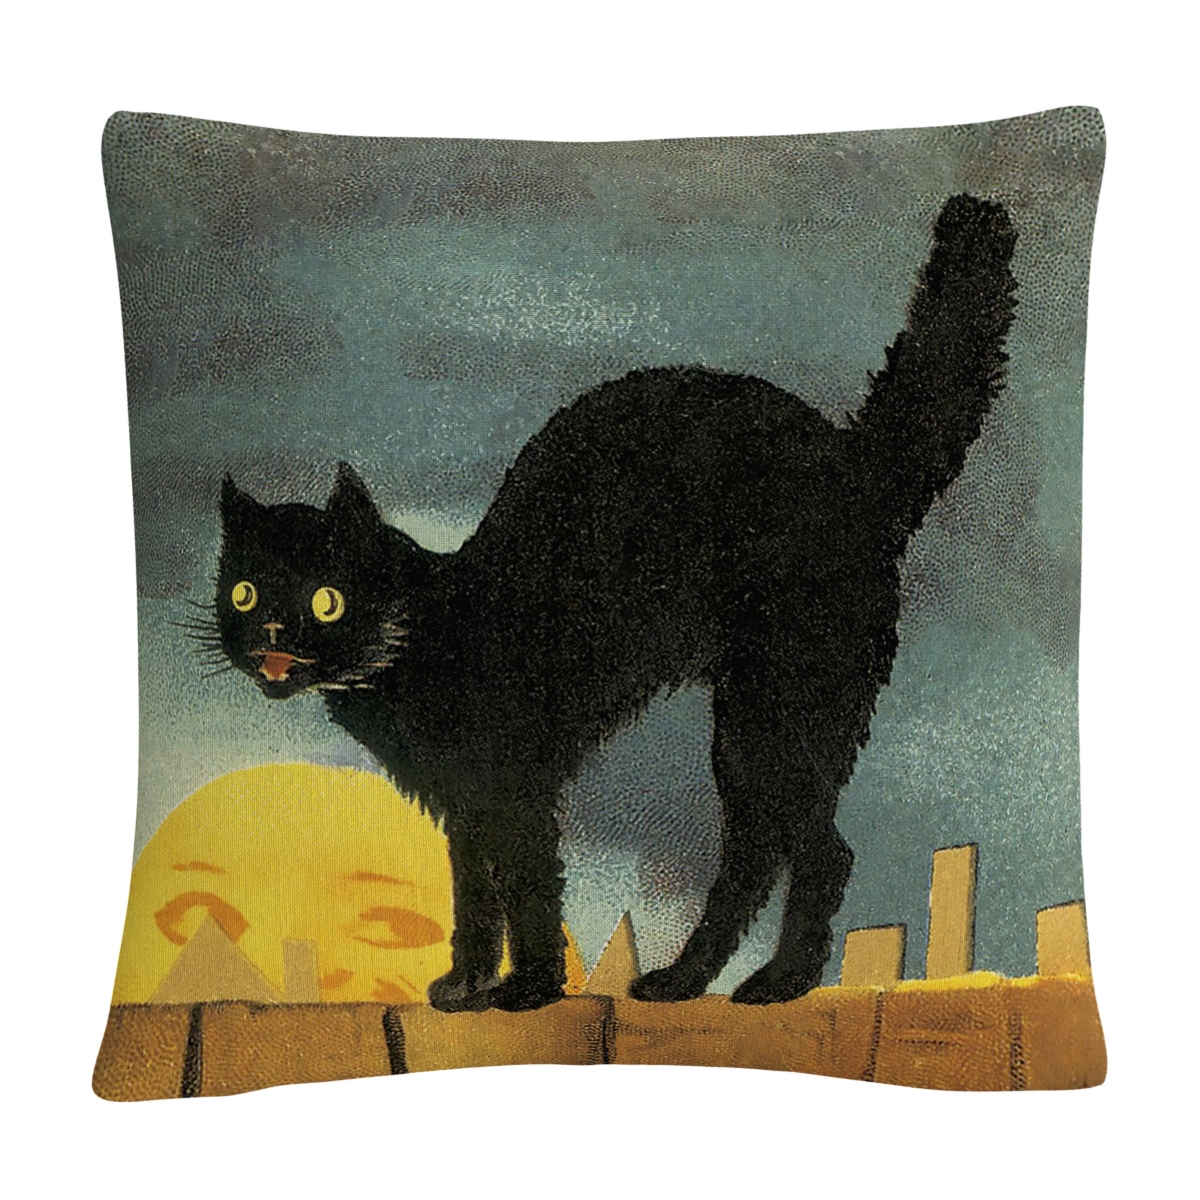 Abc Black Cat On Fence Night Halloween Decorative Pillow, 16 x 16